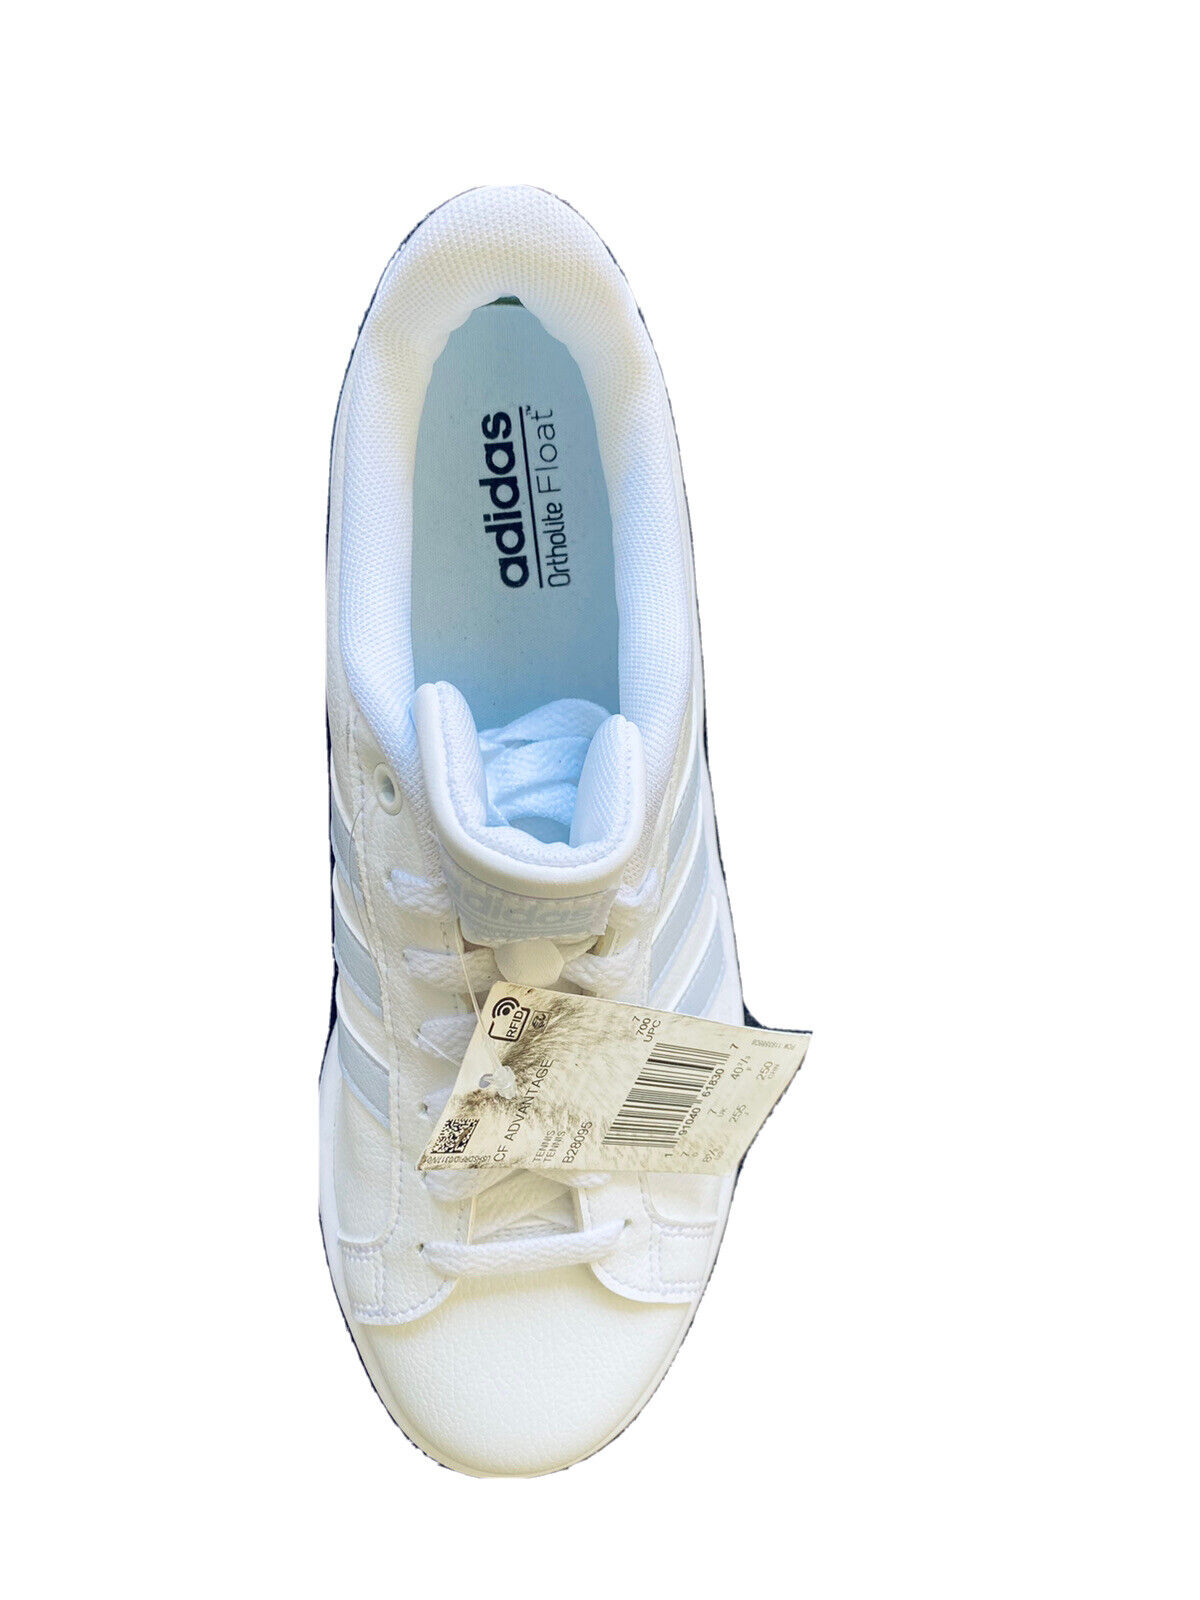 Acostumbrarse a Quagga Habitual Adidas ortholite float cloudfoam WHITE women's sneaker athletic shoe US 8.5  | eBay